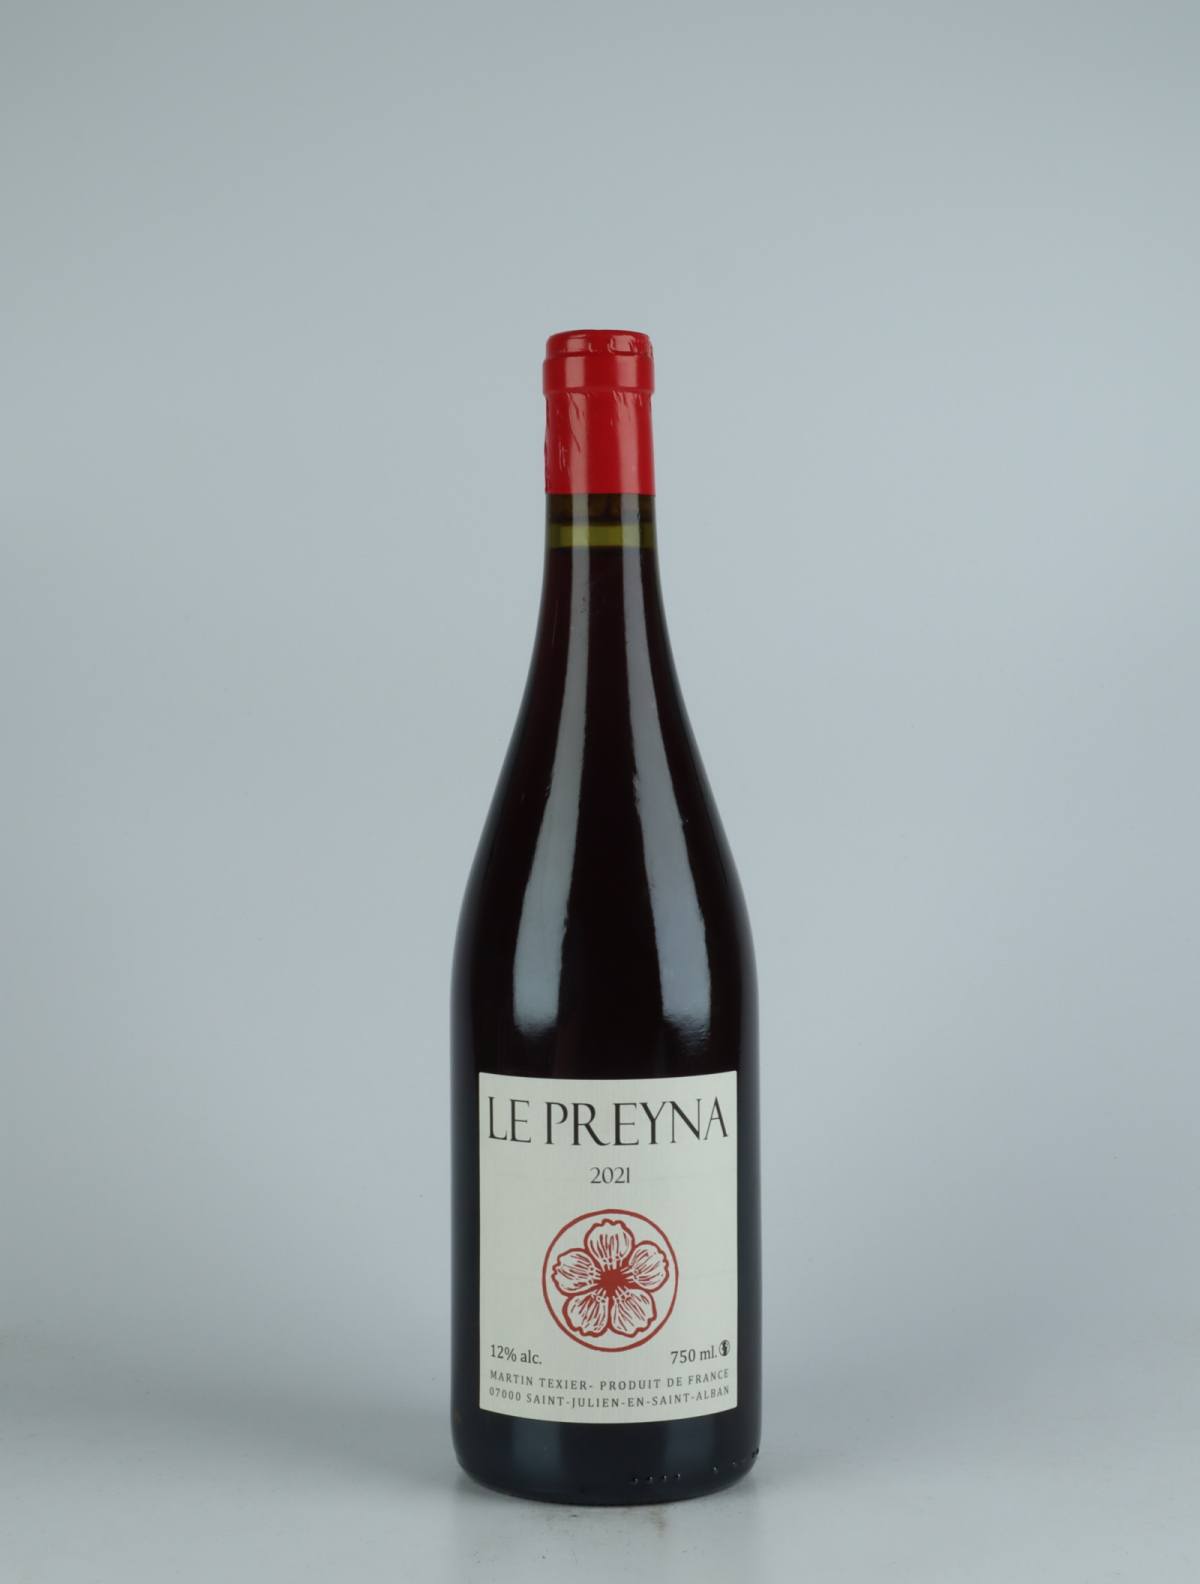 A bottle 2021 Le Preyna Red wine from Martin Texier, Rhône in France